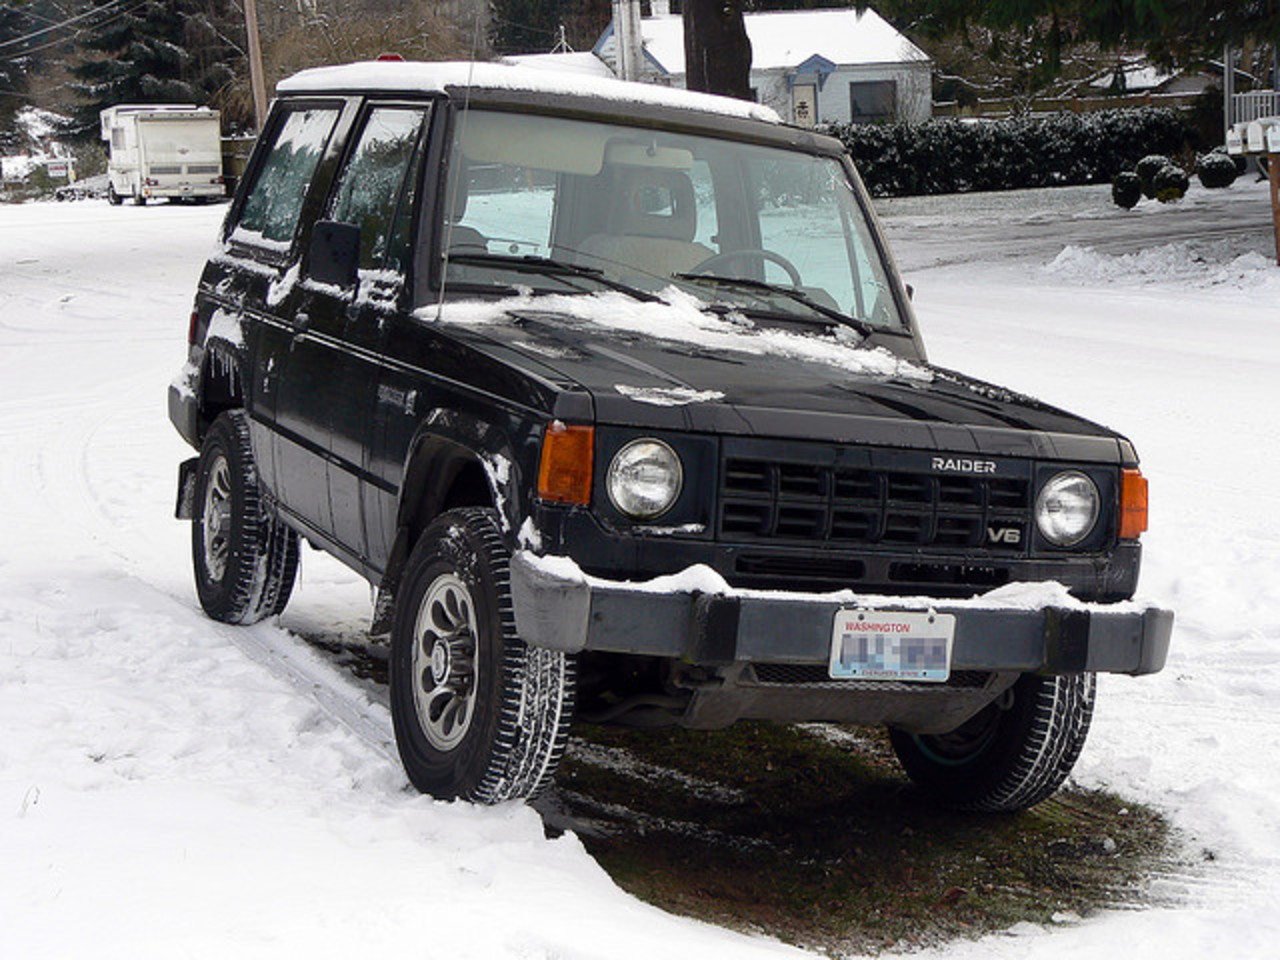 Snow - My 1989 Dodge Raider 4WD by Don Qua